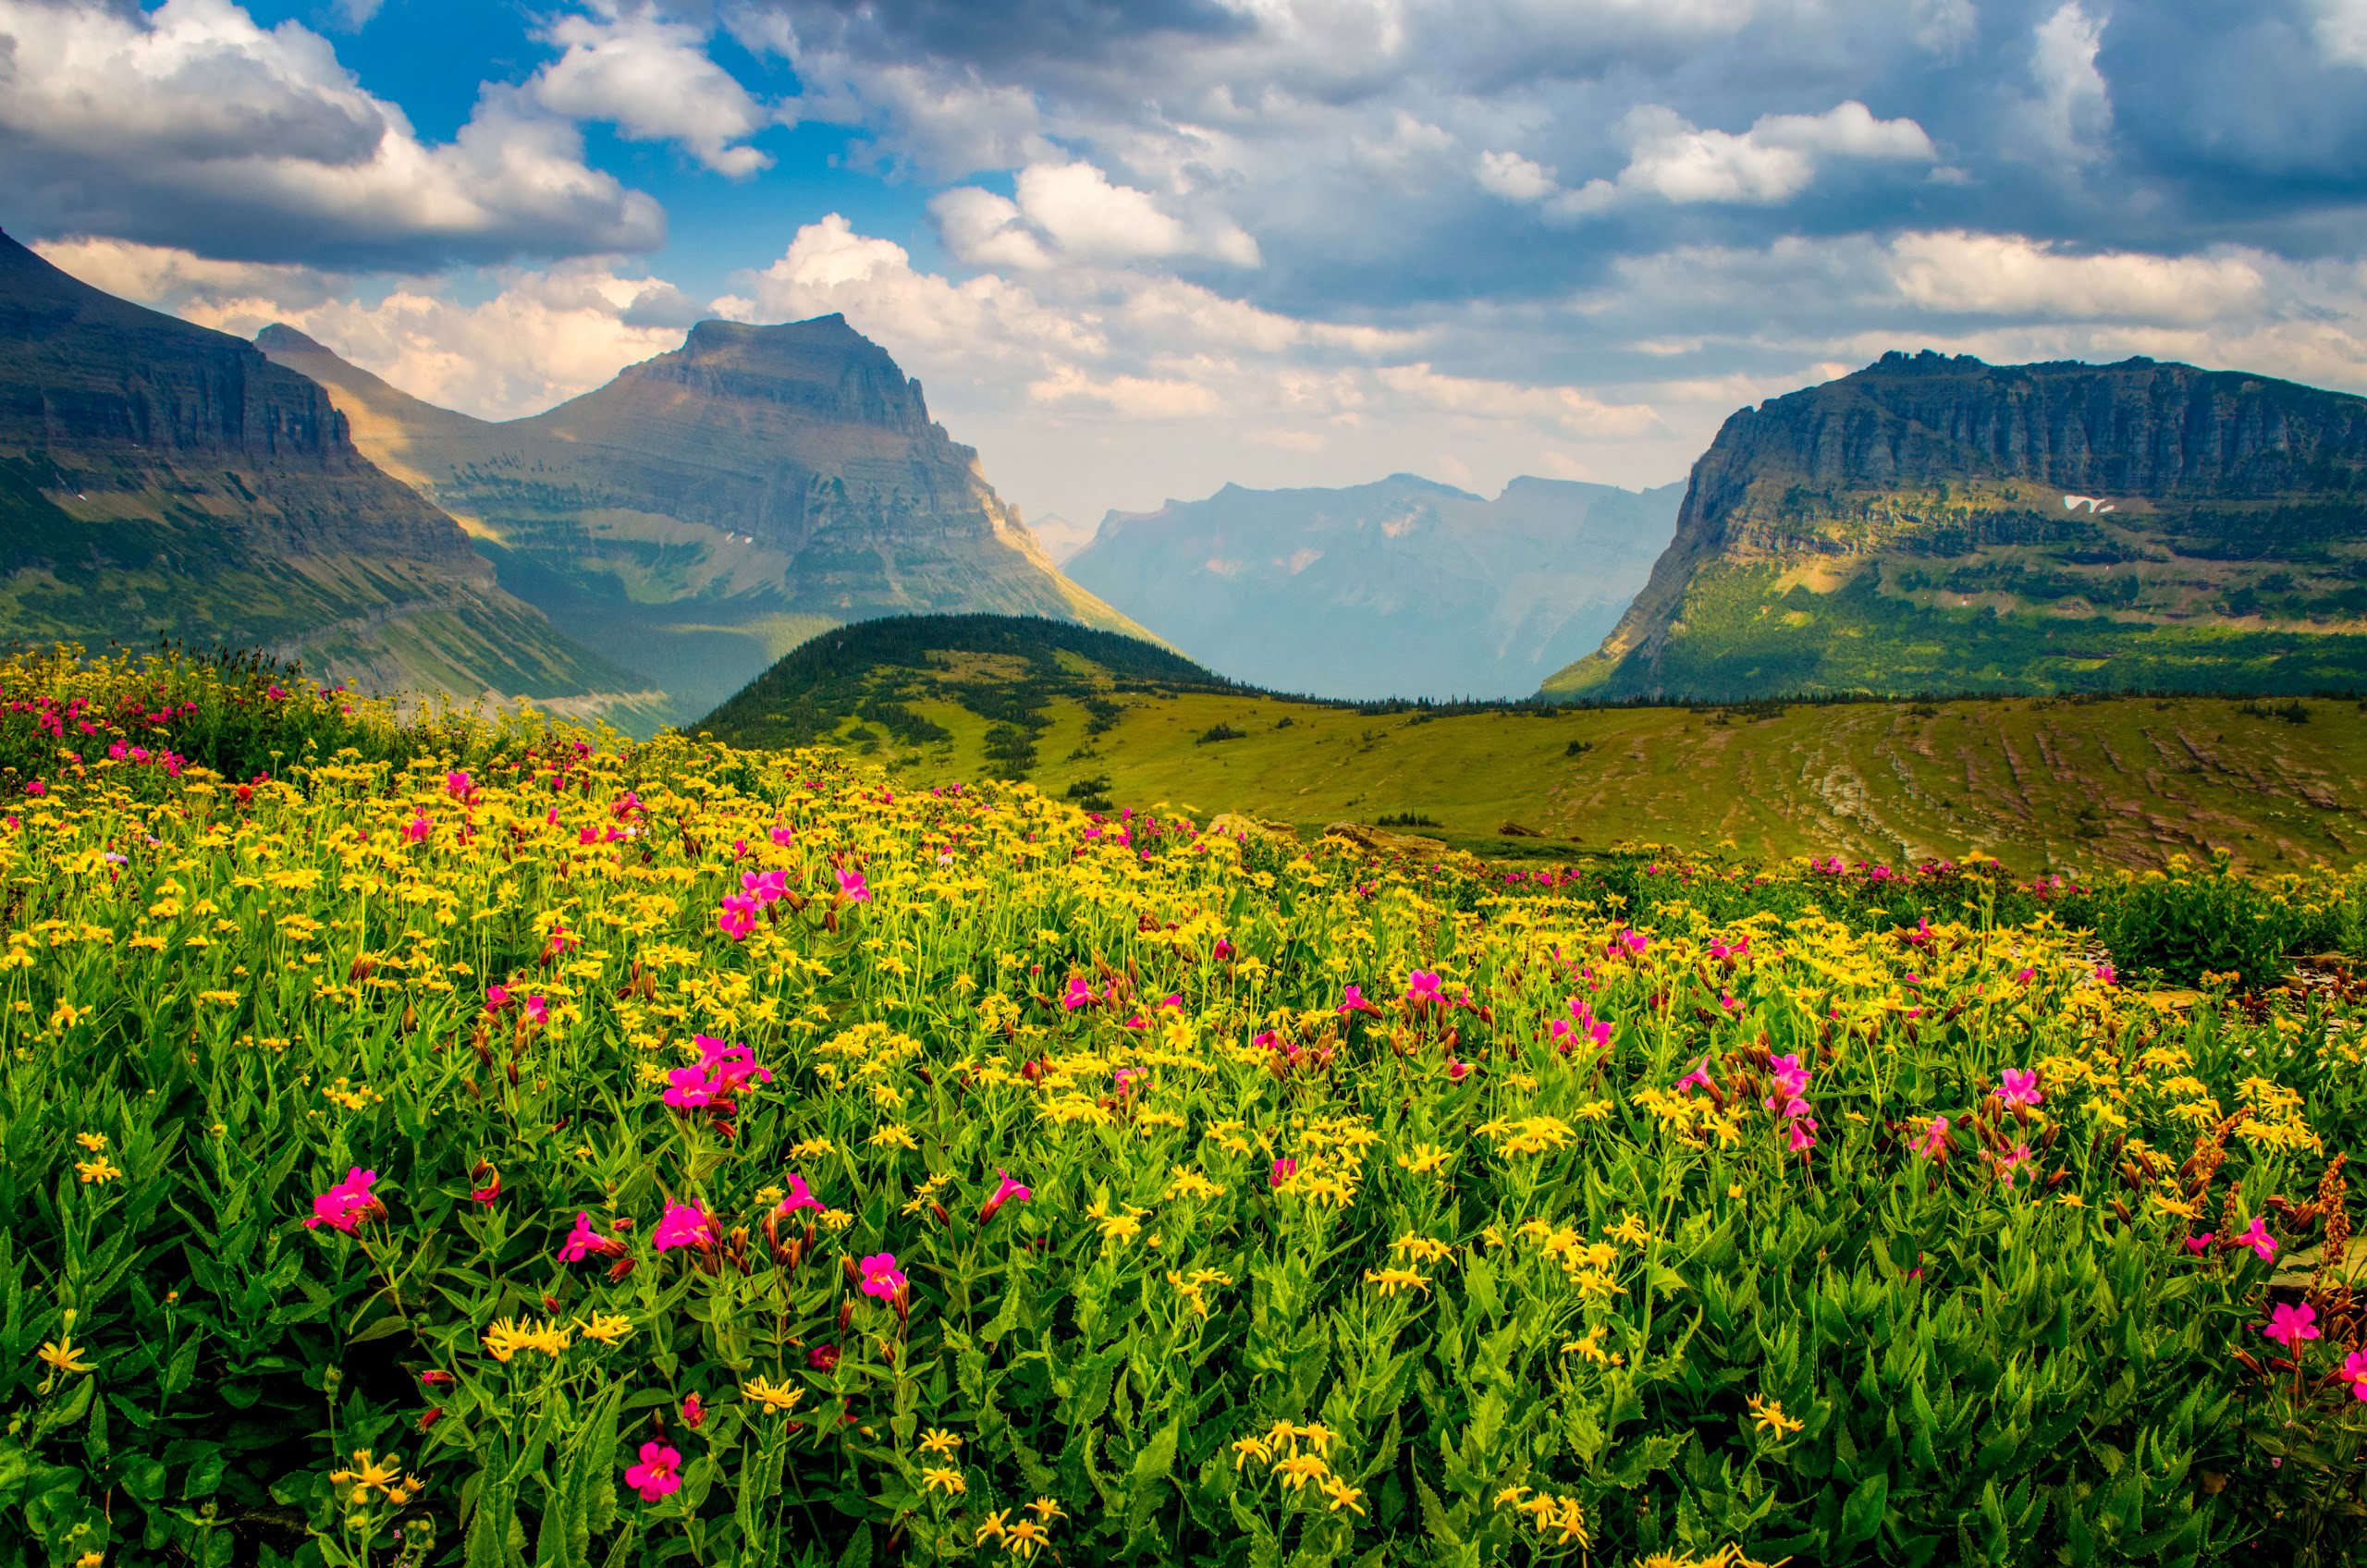 416103 descargar imagen tierra/naturaleza, flor, paisaje, montaña, primavera, flor silvestre, flores: fondos de pantalla y protectores de pantalla gratis